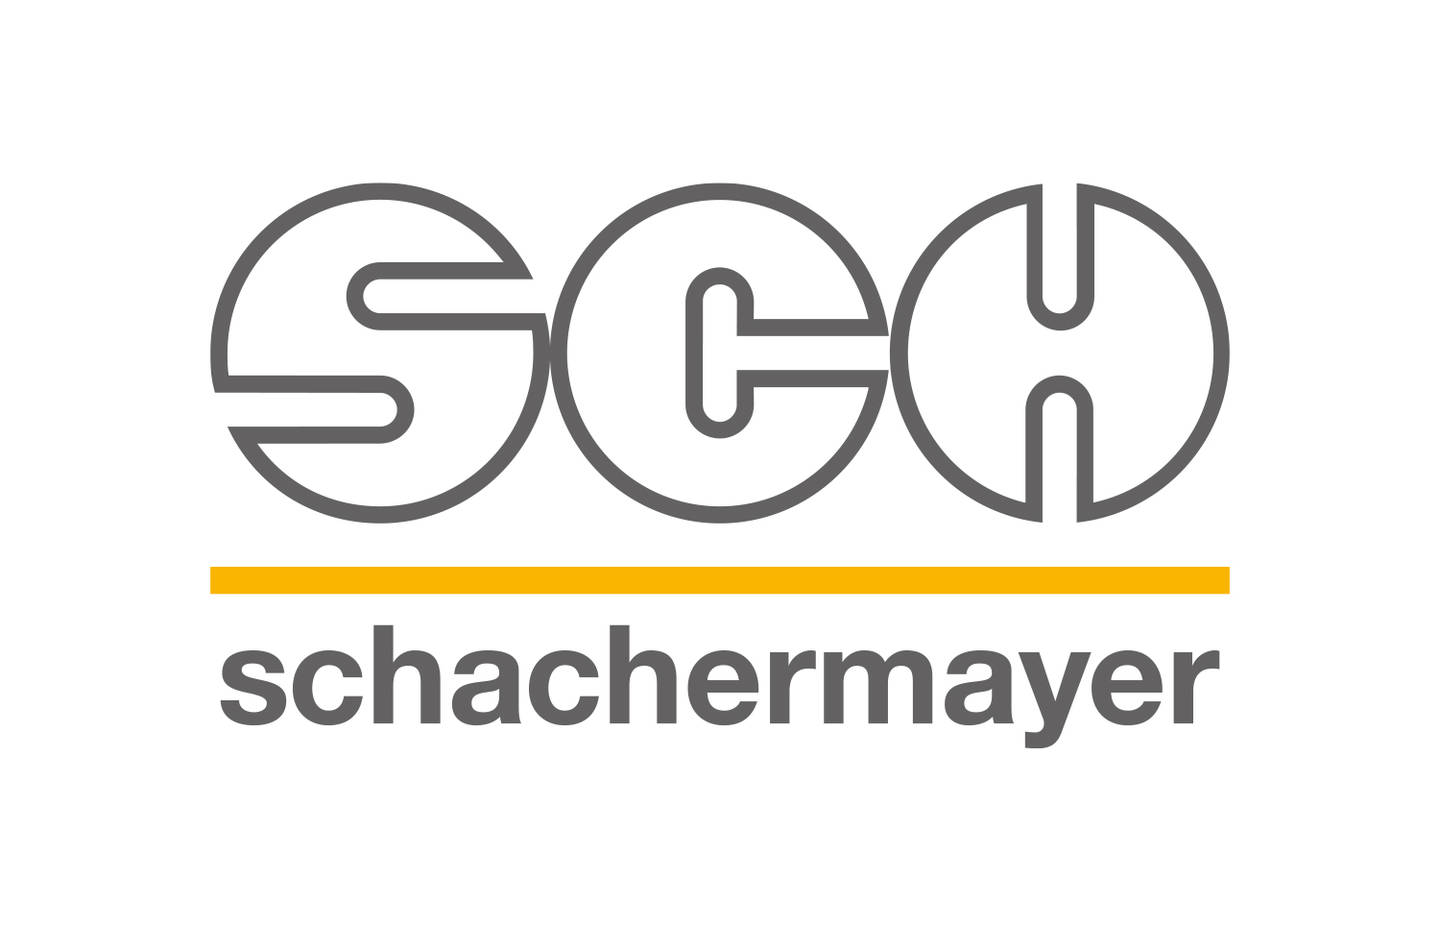 Schachermayer Logo